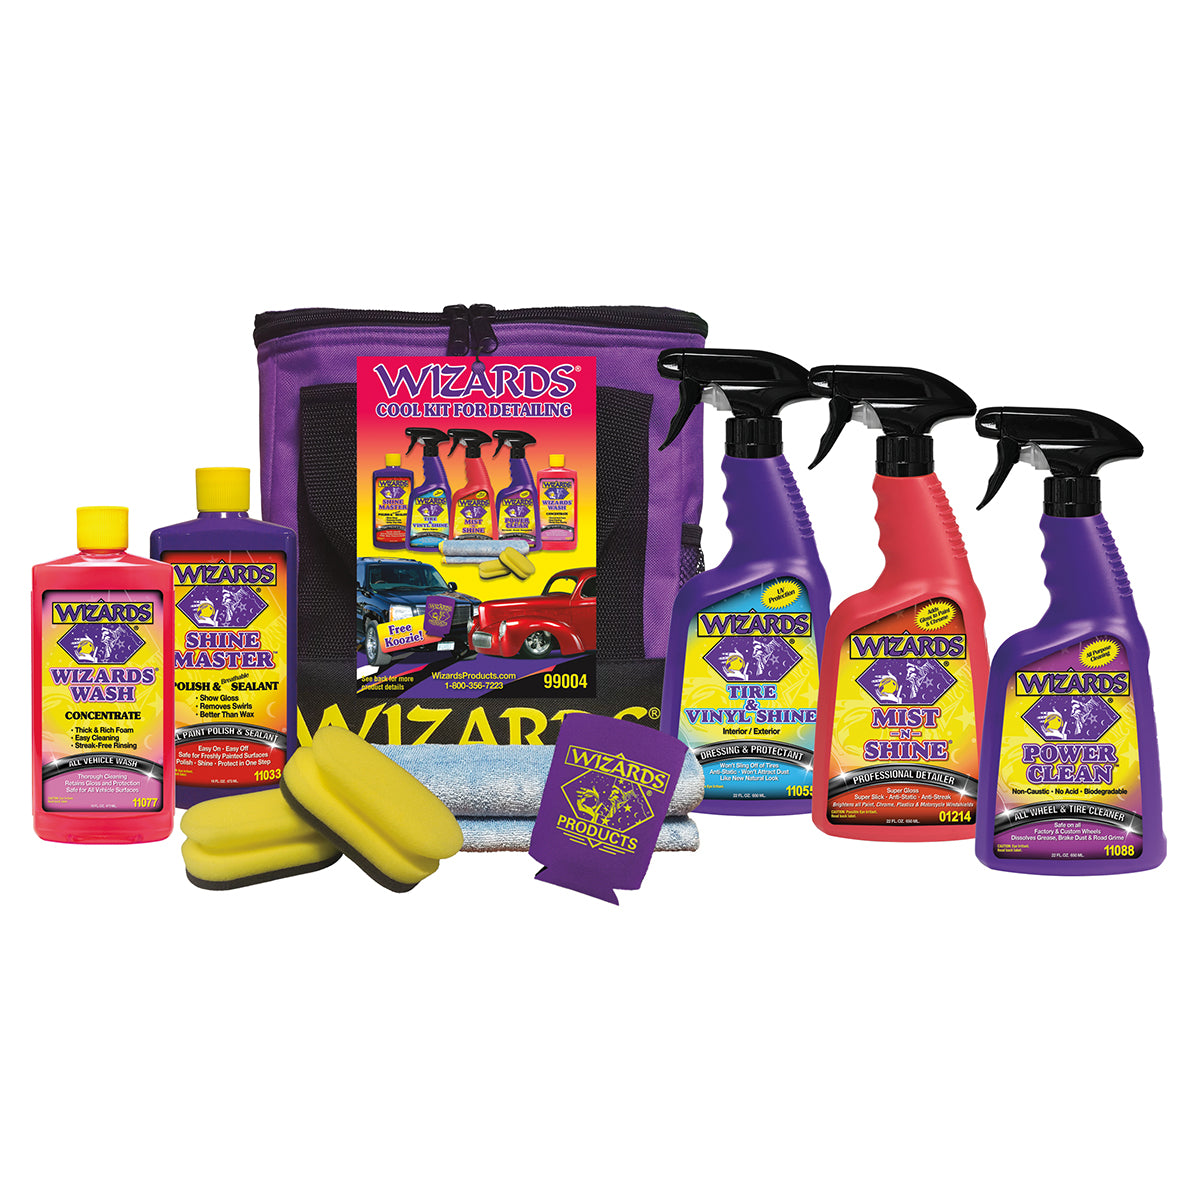 Wizard Wax Spray Wax – C&D Detailing Car Care